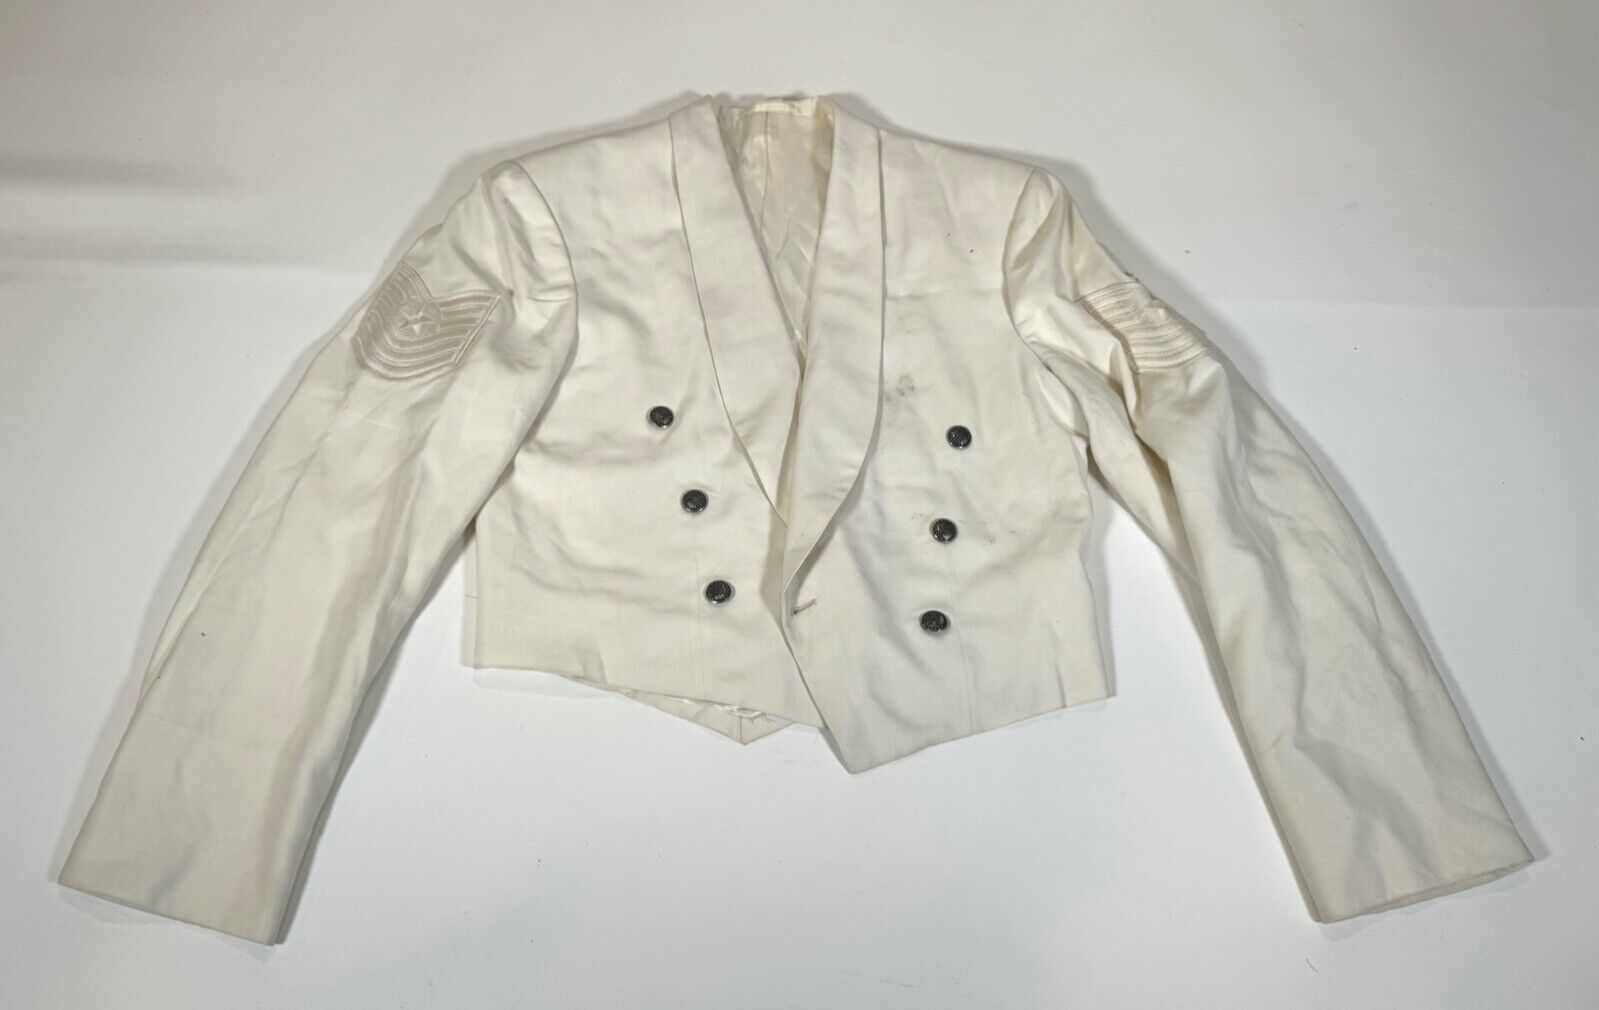 USAF Air Force 1950s Vintage Enlisted White Mess Dress Uniform Jacket Size 42